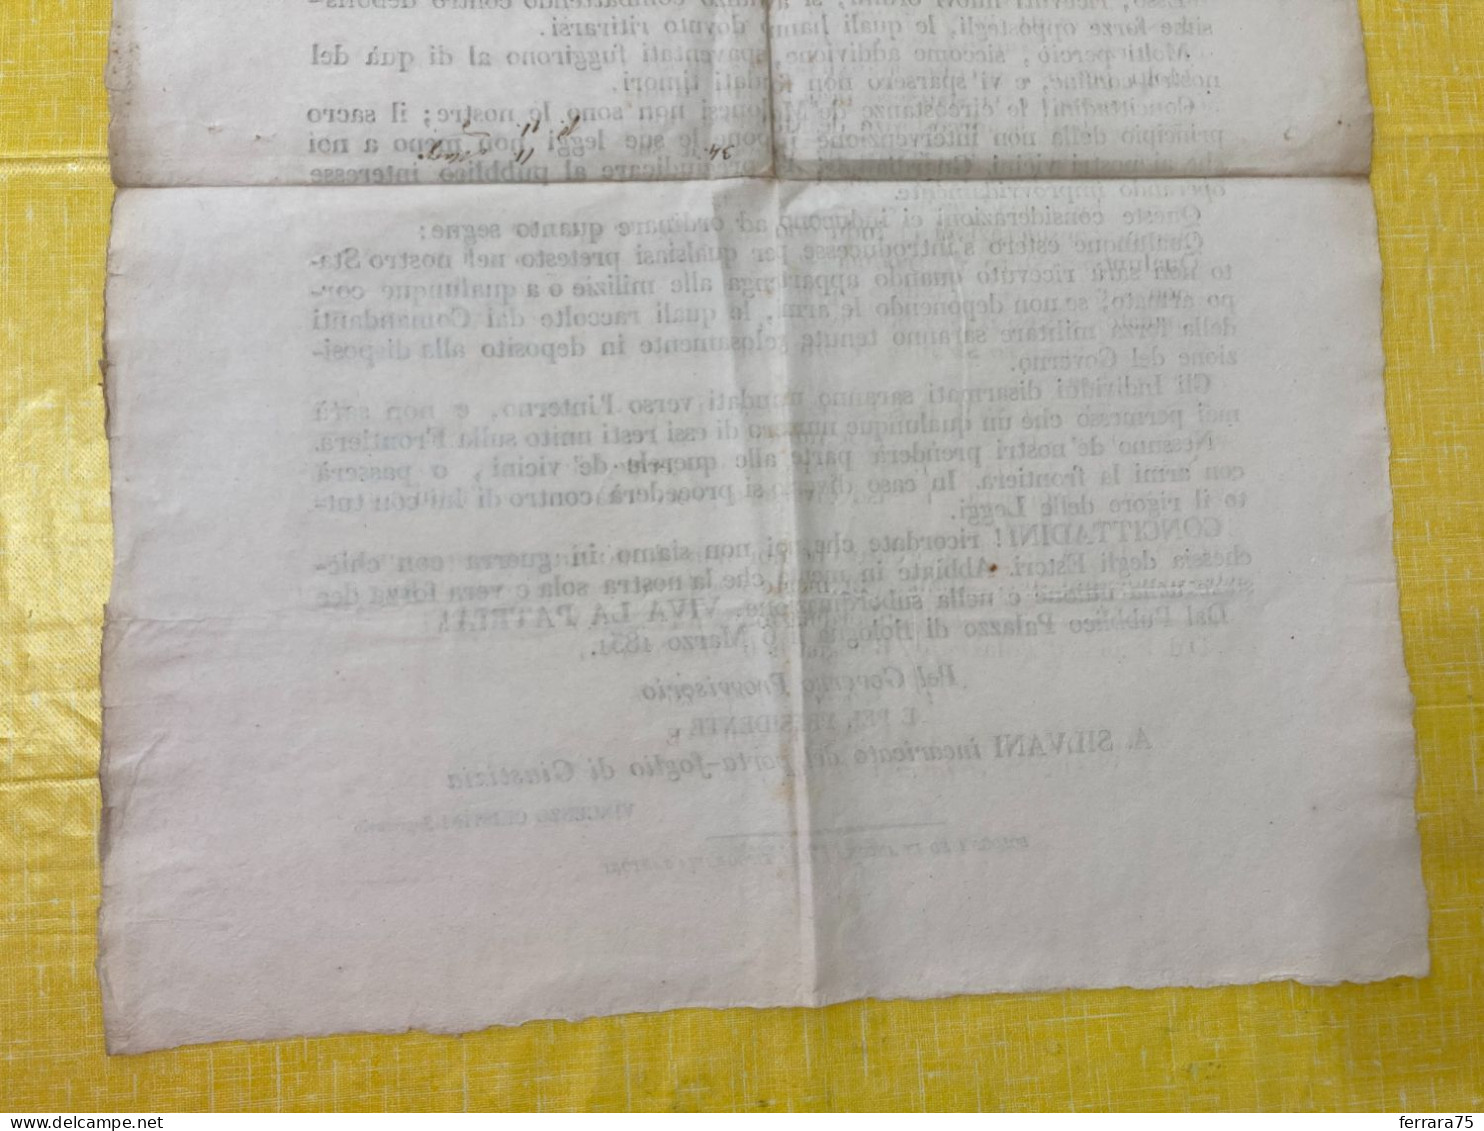 MANIFESTO GOVERNO PROVVISORIO MOTI RIVOLUZIONARI BATTAGLIONE ESTENSE 1831. - Documents Historiques